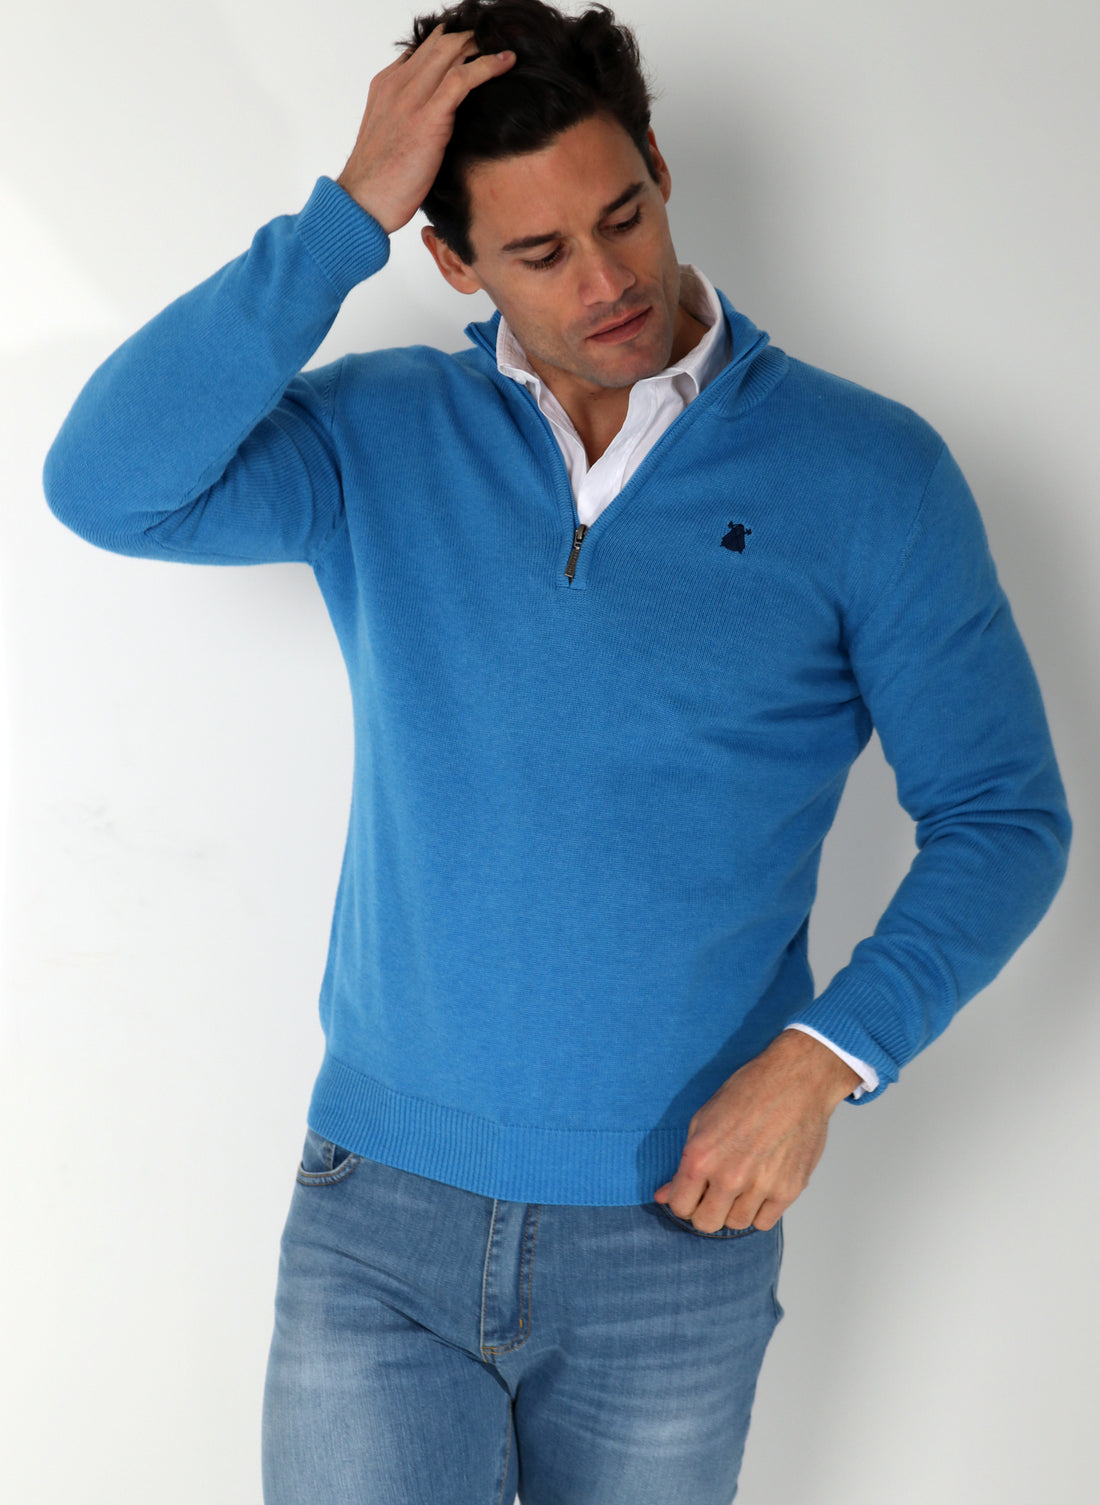 Men's Sky Blue Zipper Sweater